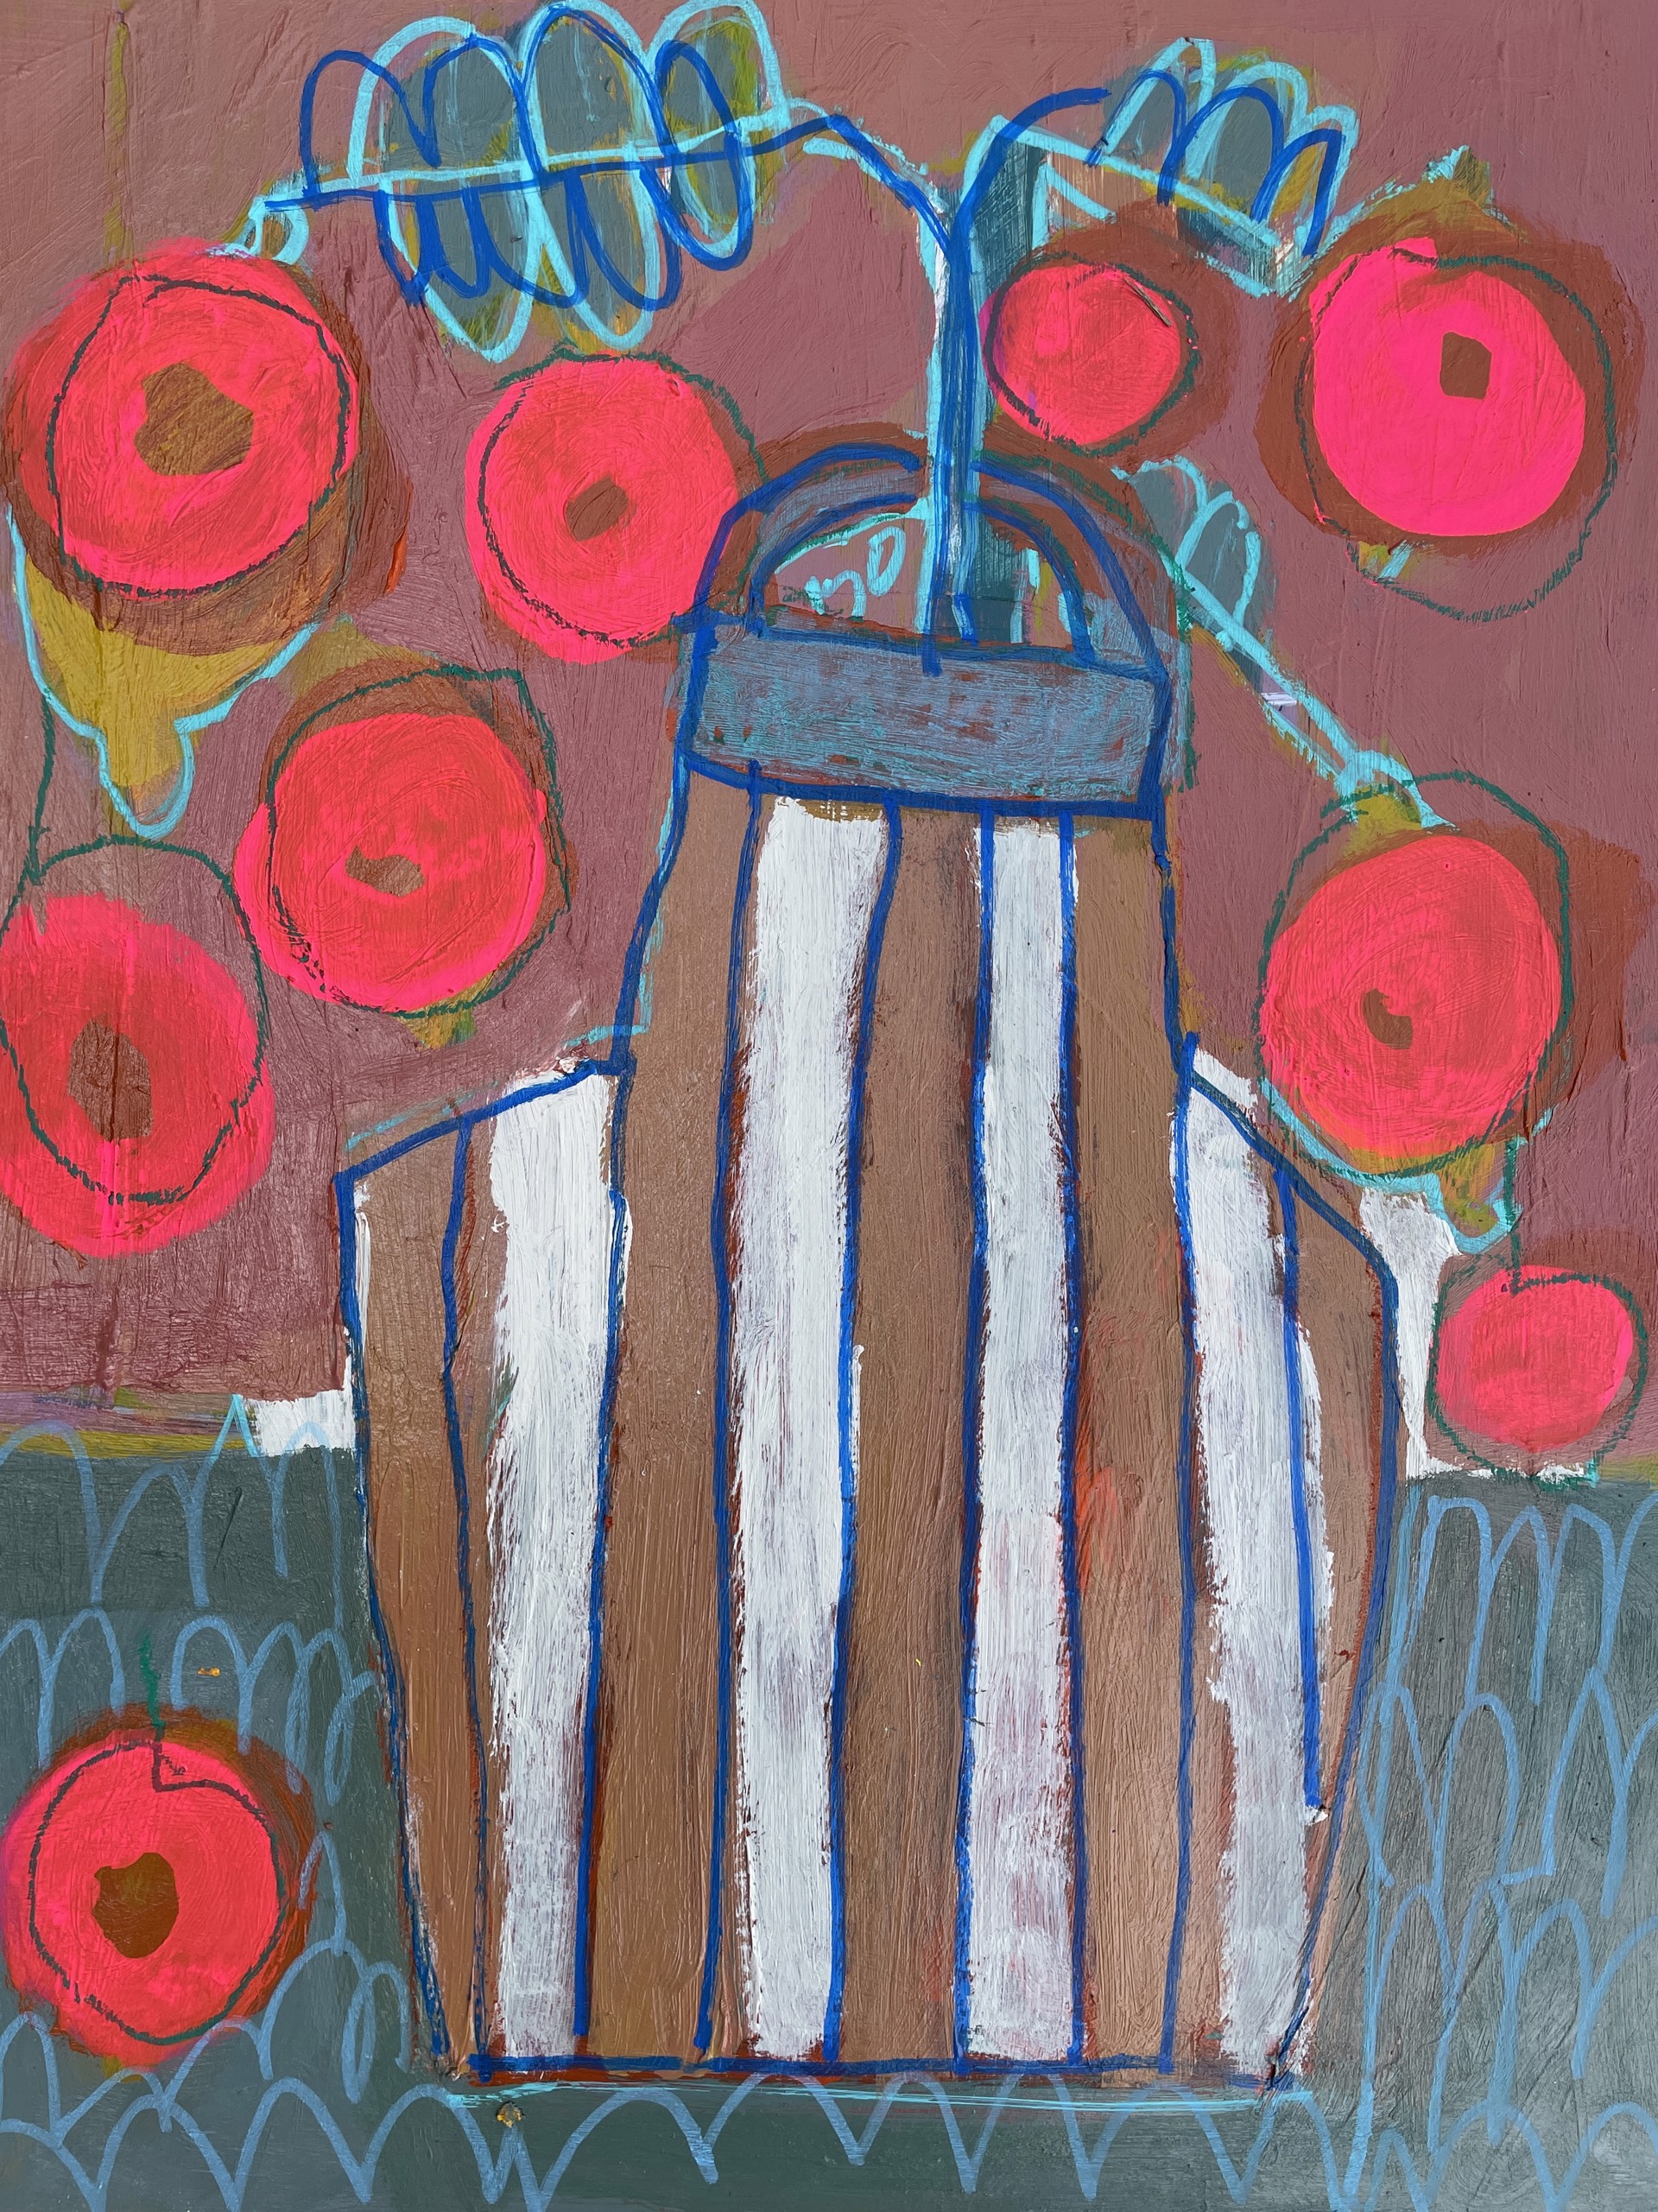 Brown and White Striped Vase by Rachael Van Dyke